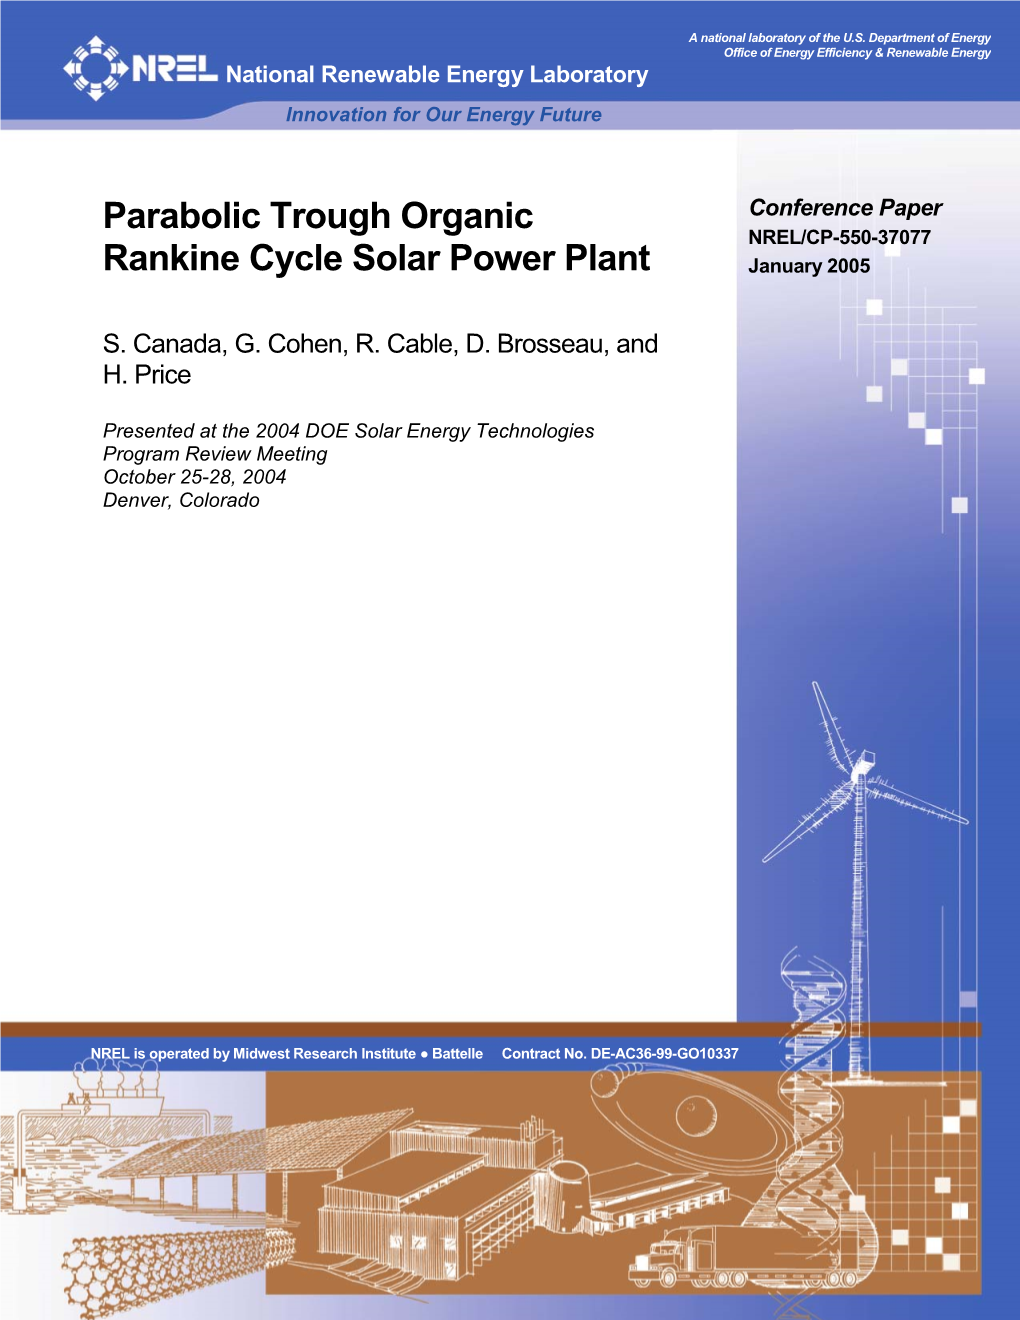 Parabolic Trough Organic Rankine Cycle Solar Power Plant DE-AC36-99-GO10337